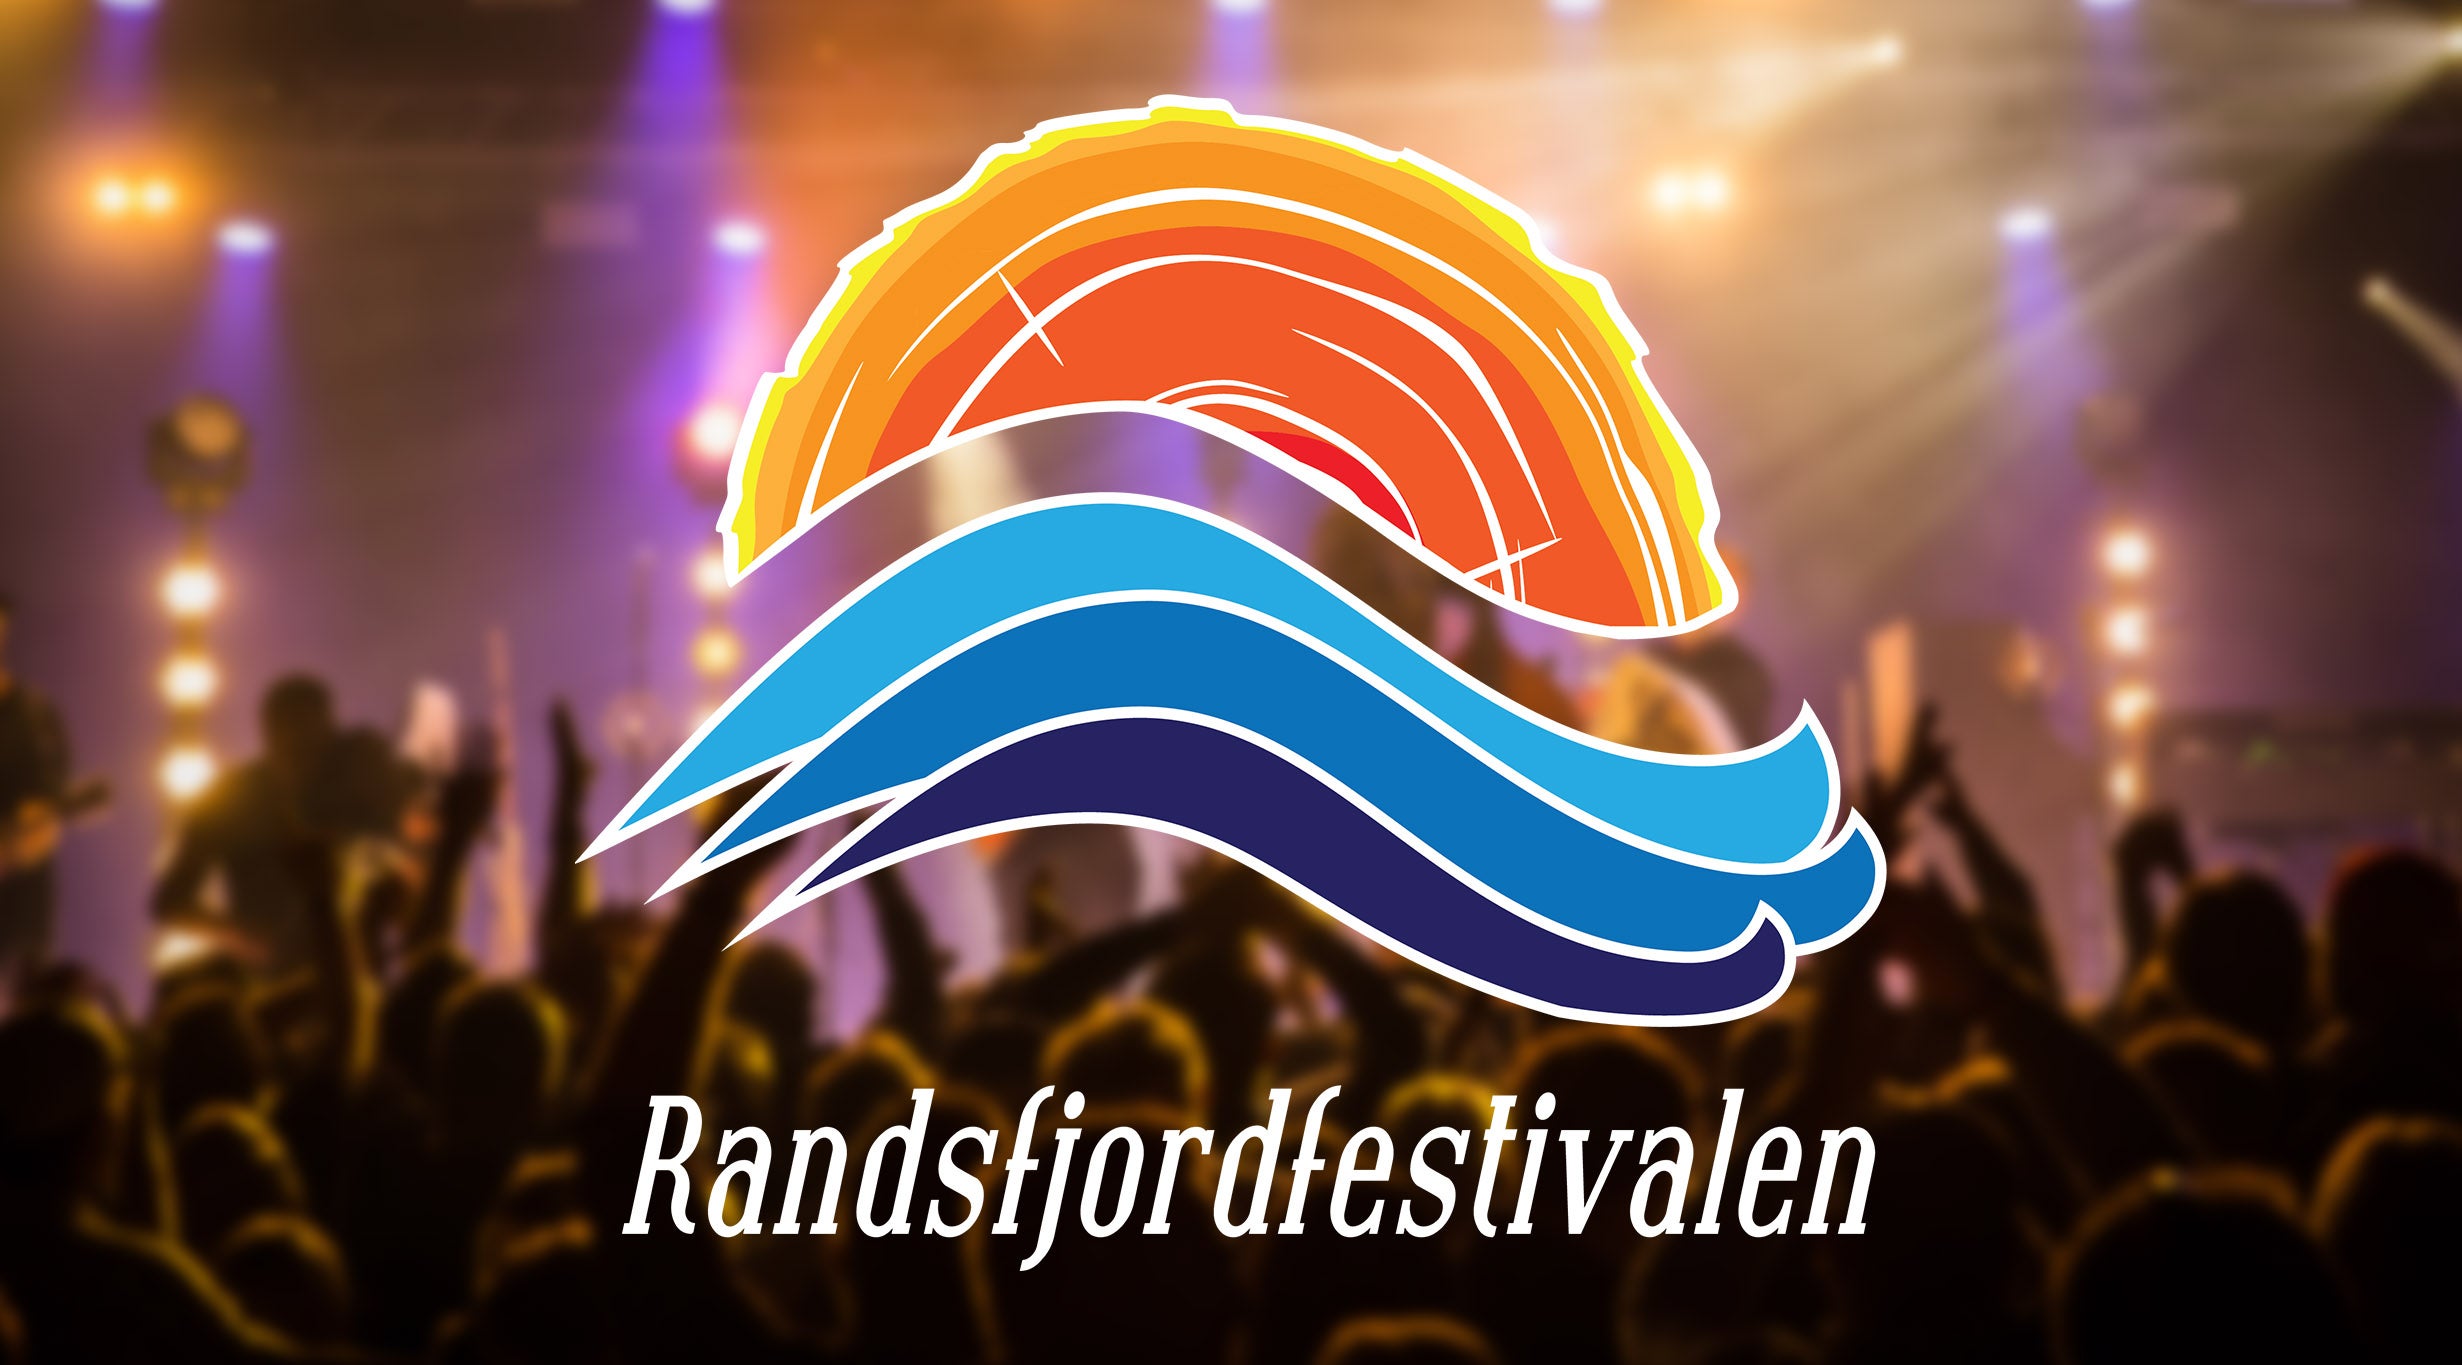 Randsfjordfestivalen presale information on freepresalepasswords.com